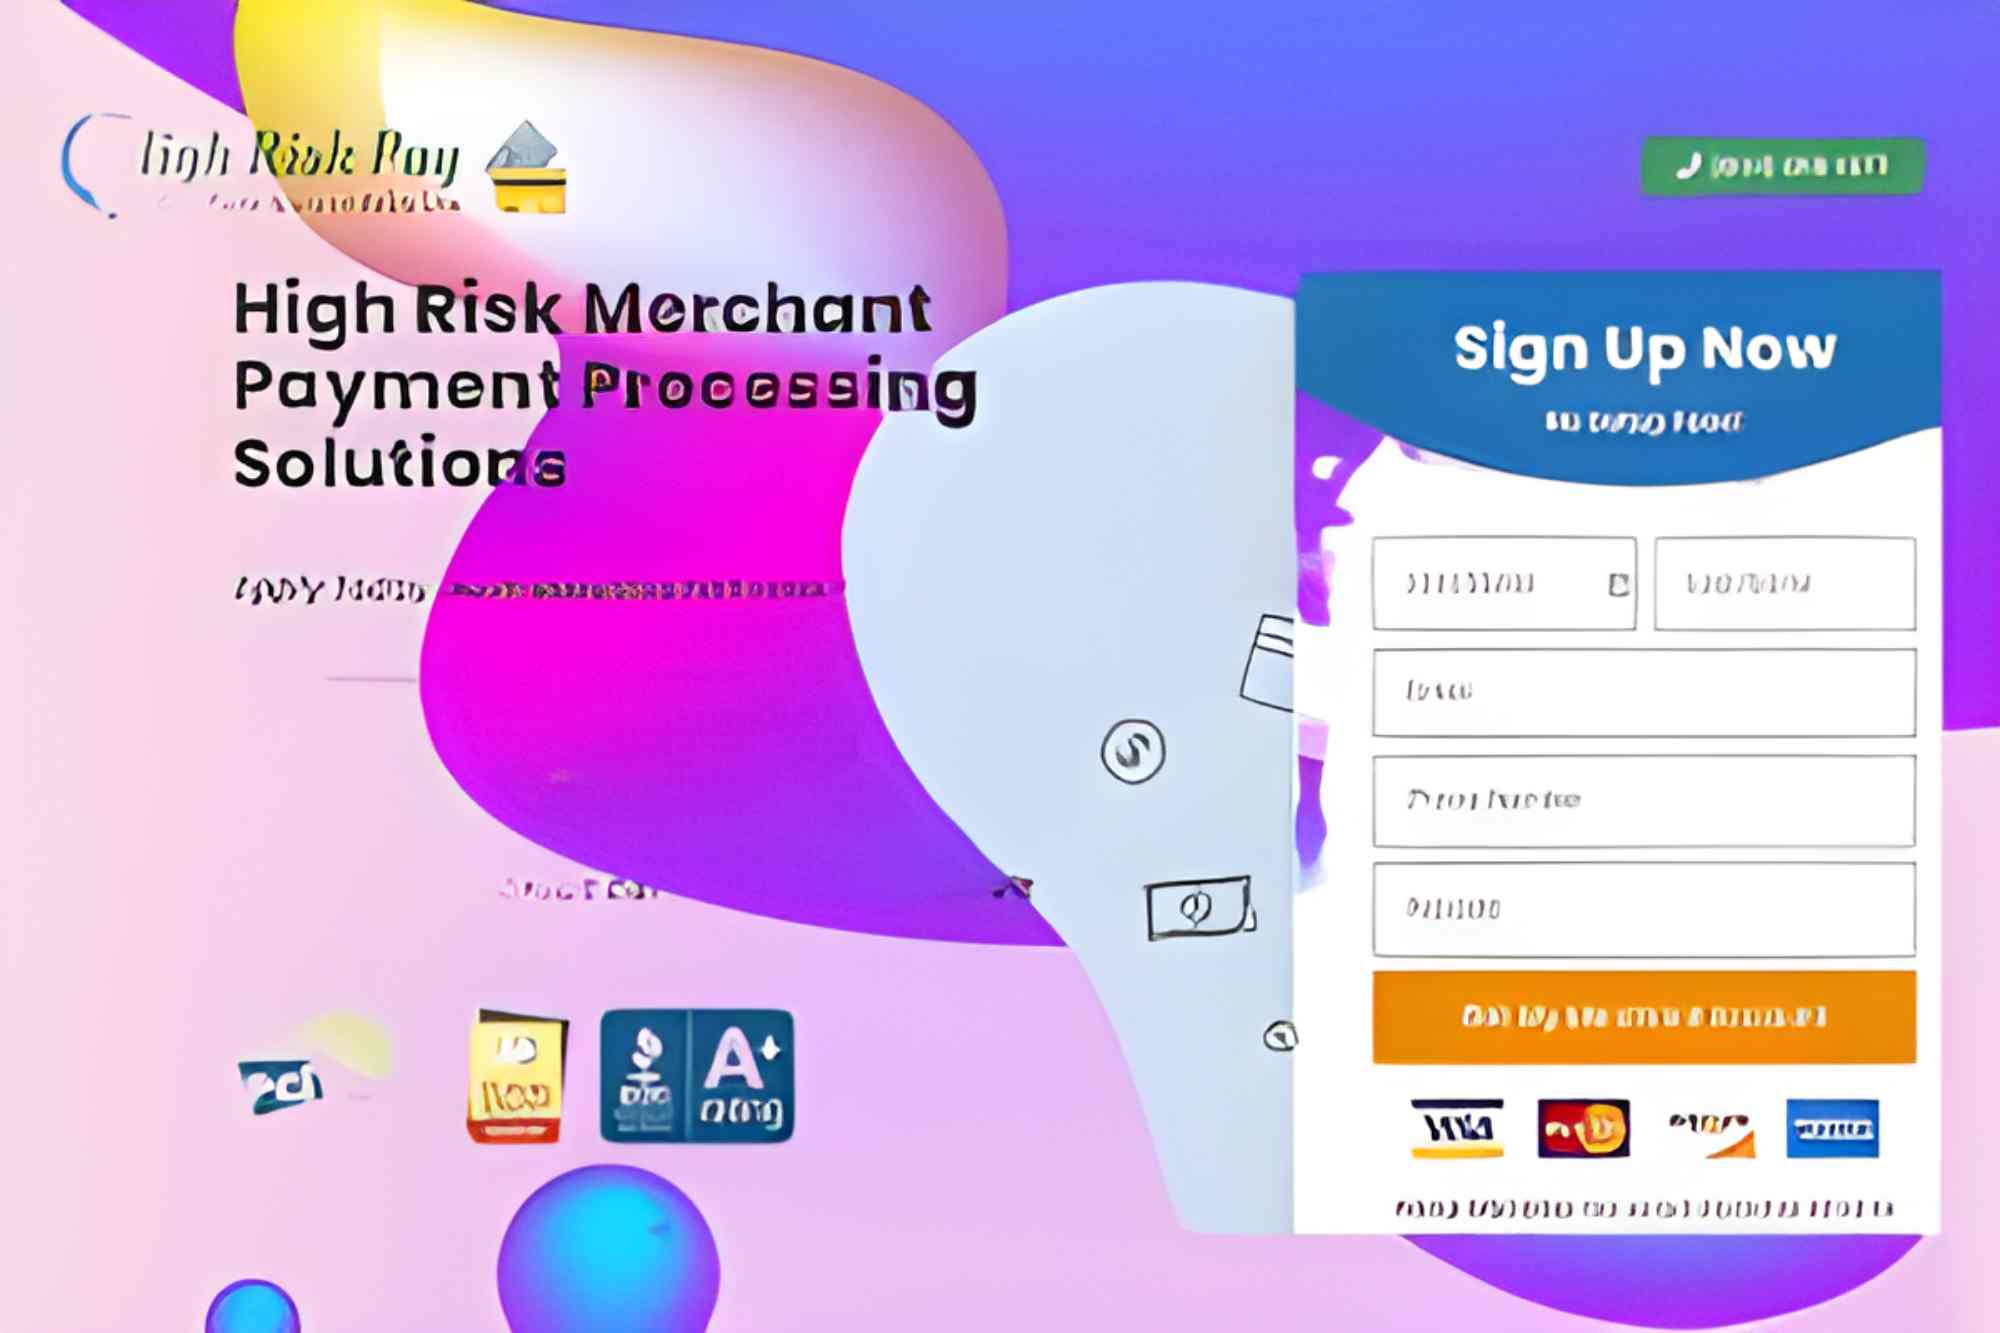 high risk merchant account at highriskpay.com